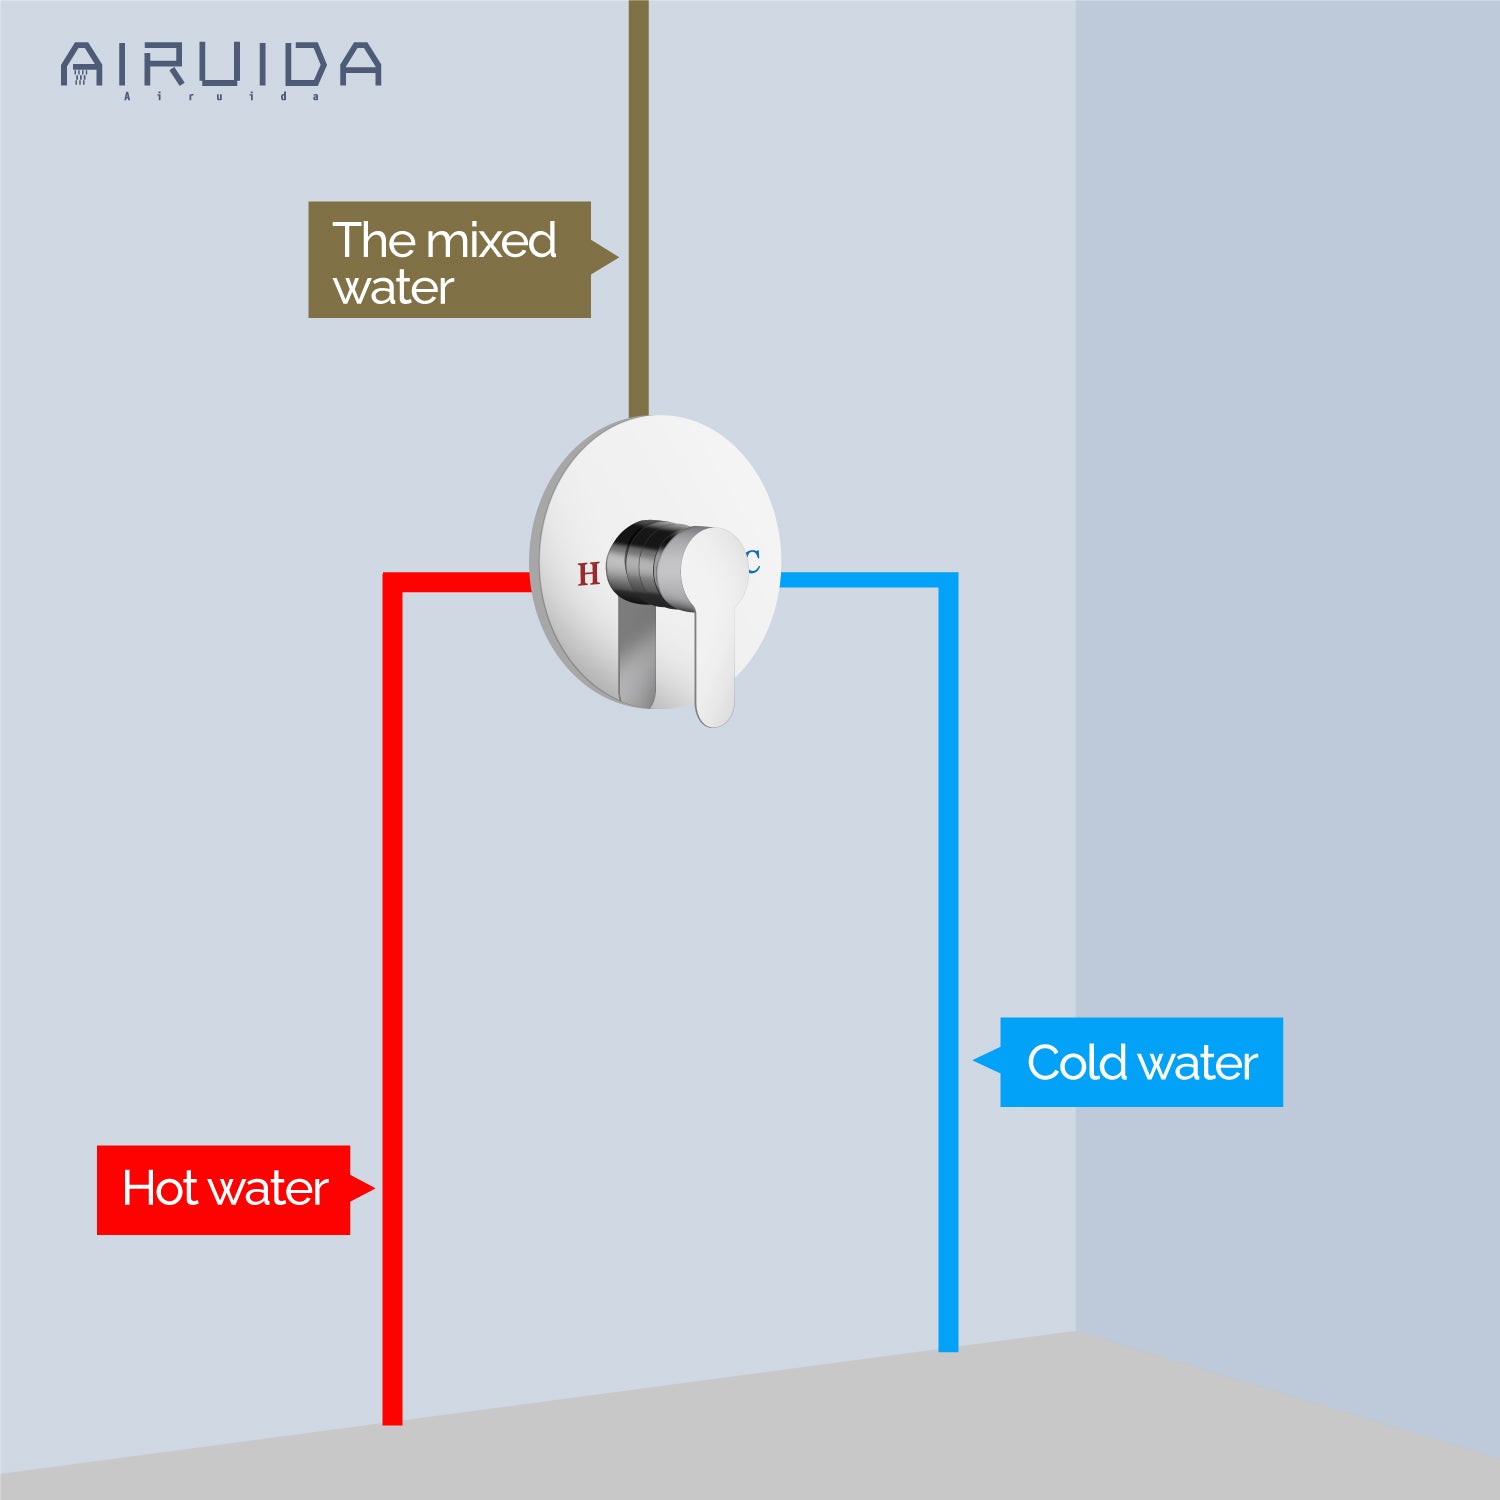 Airuida Single-Function Shower Handle Valve Trim Kit Shower Valves Wall Mount Brass Faucet Shower Rough-In Valve Bathroom Trim Kit Single Handle Tub Shower Valve Mixer